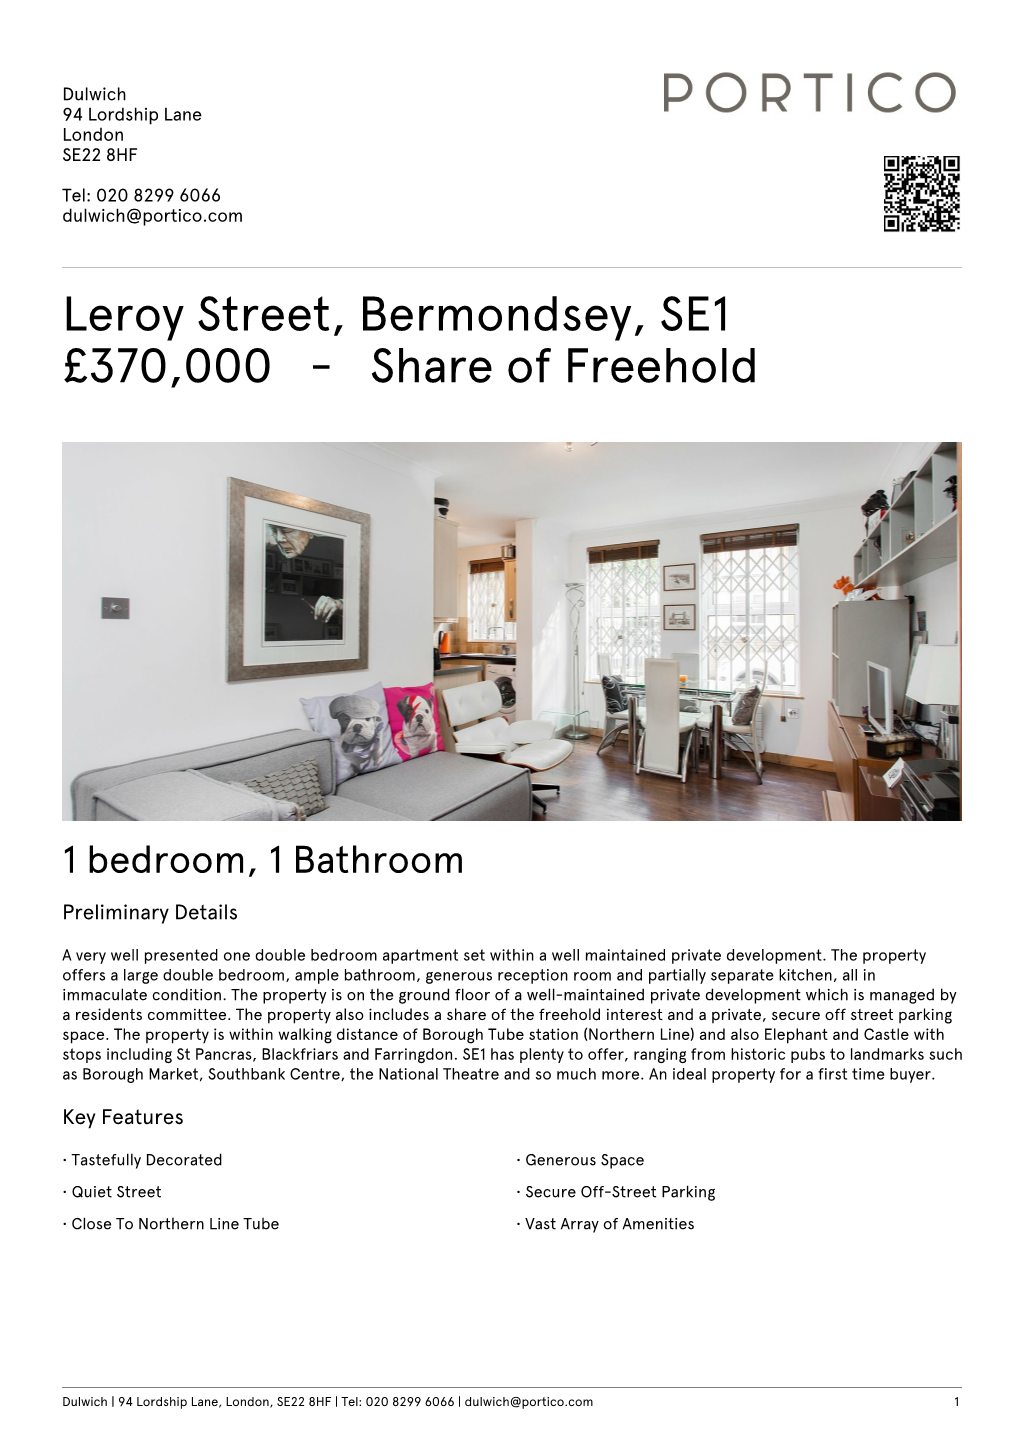 Leroy Street, Bermondsey, SE1 £370000